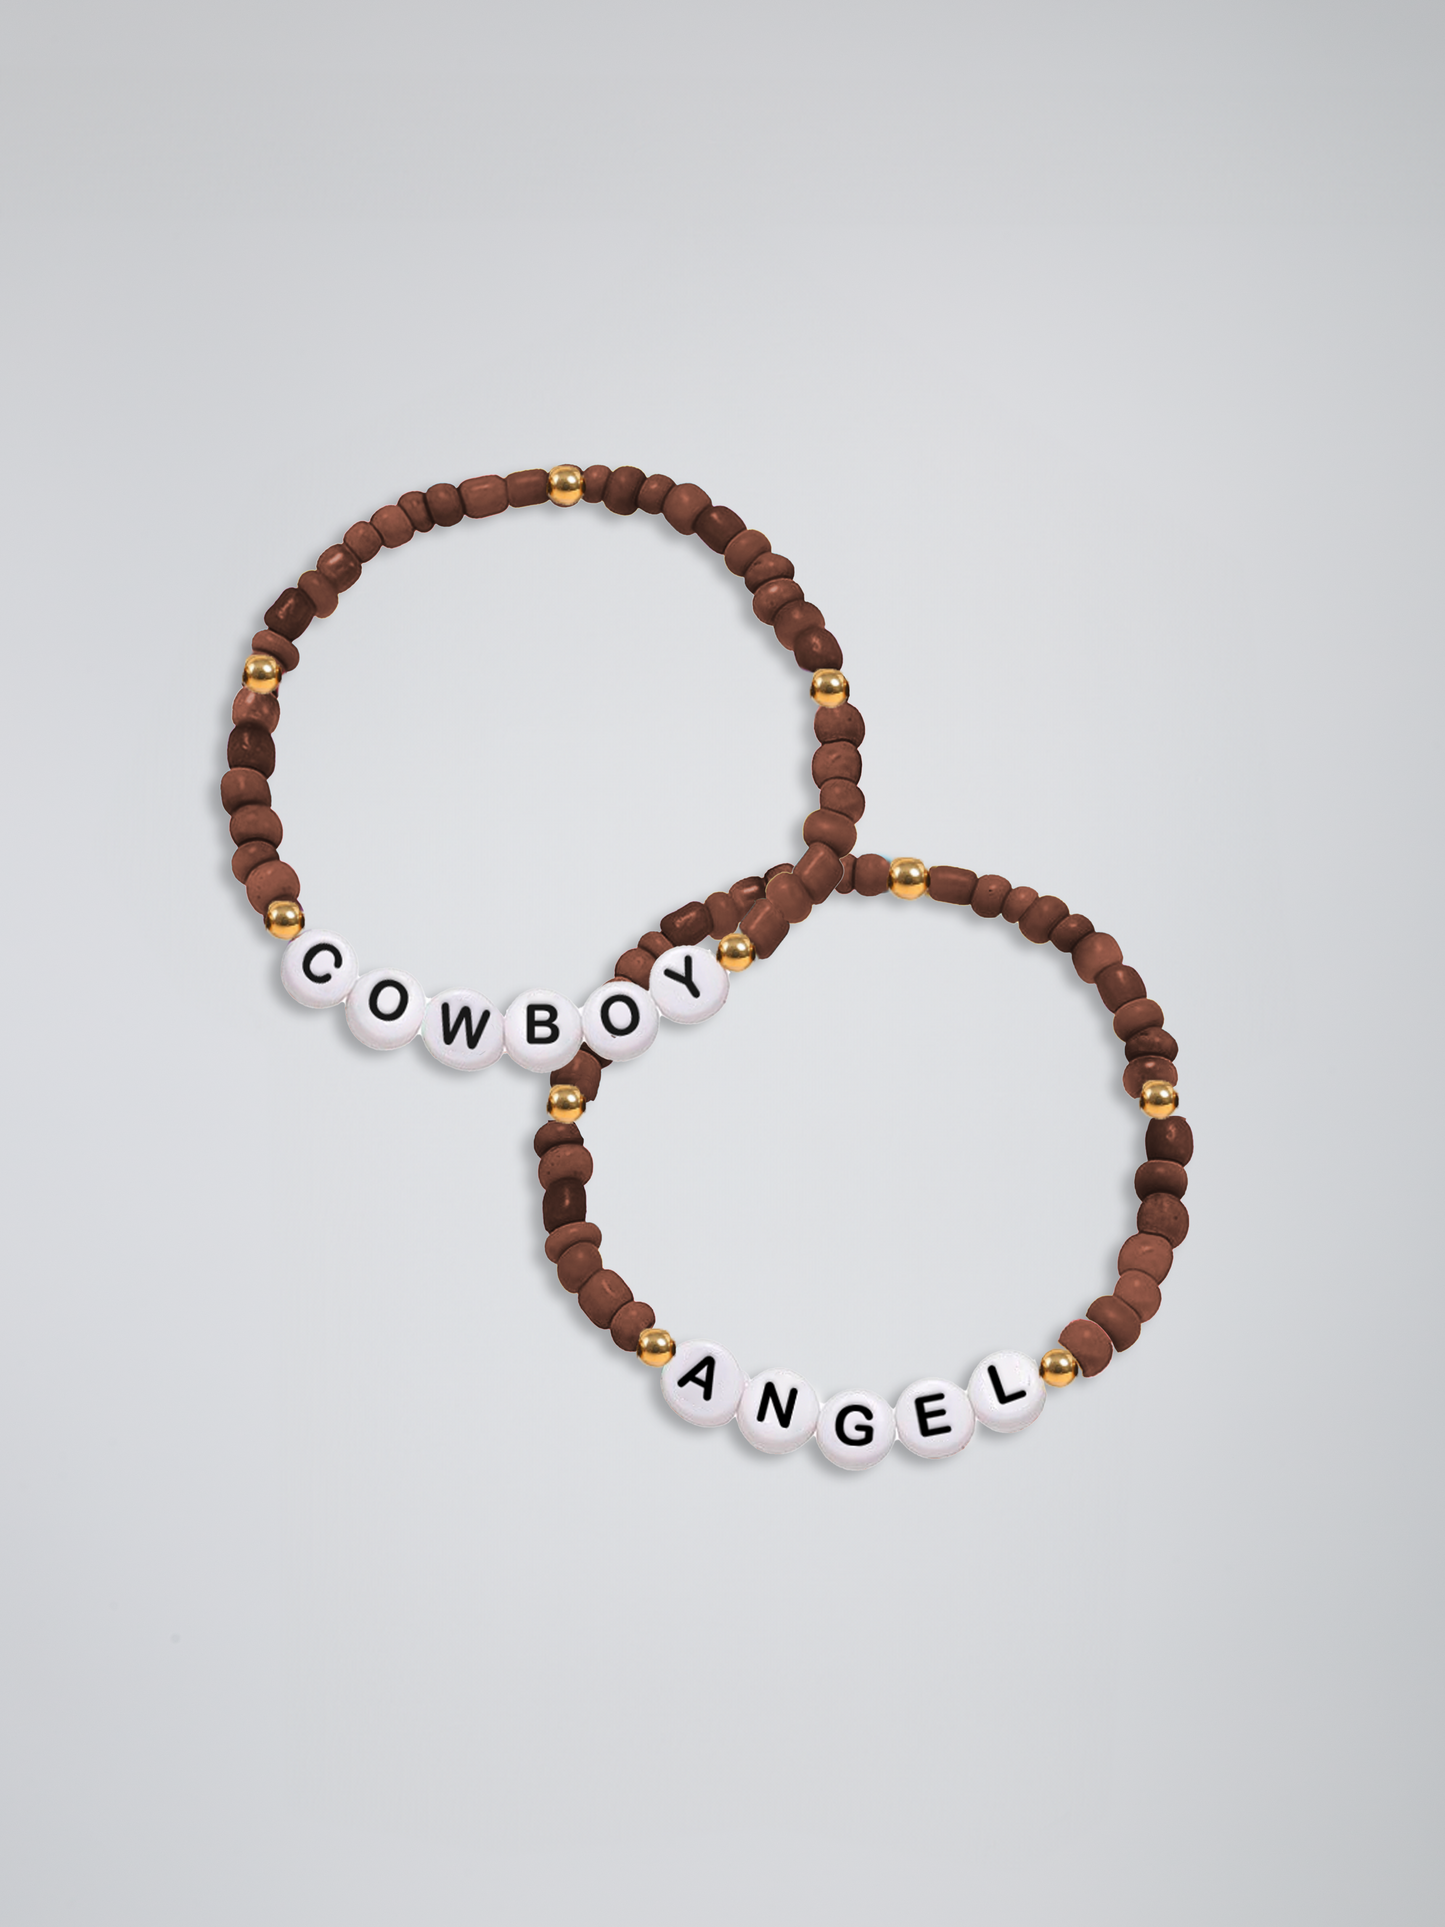 Cowboys & Angels Charm Bracelets